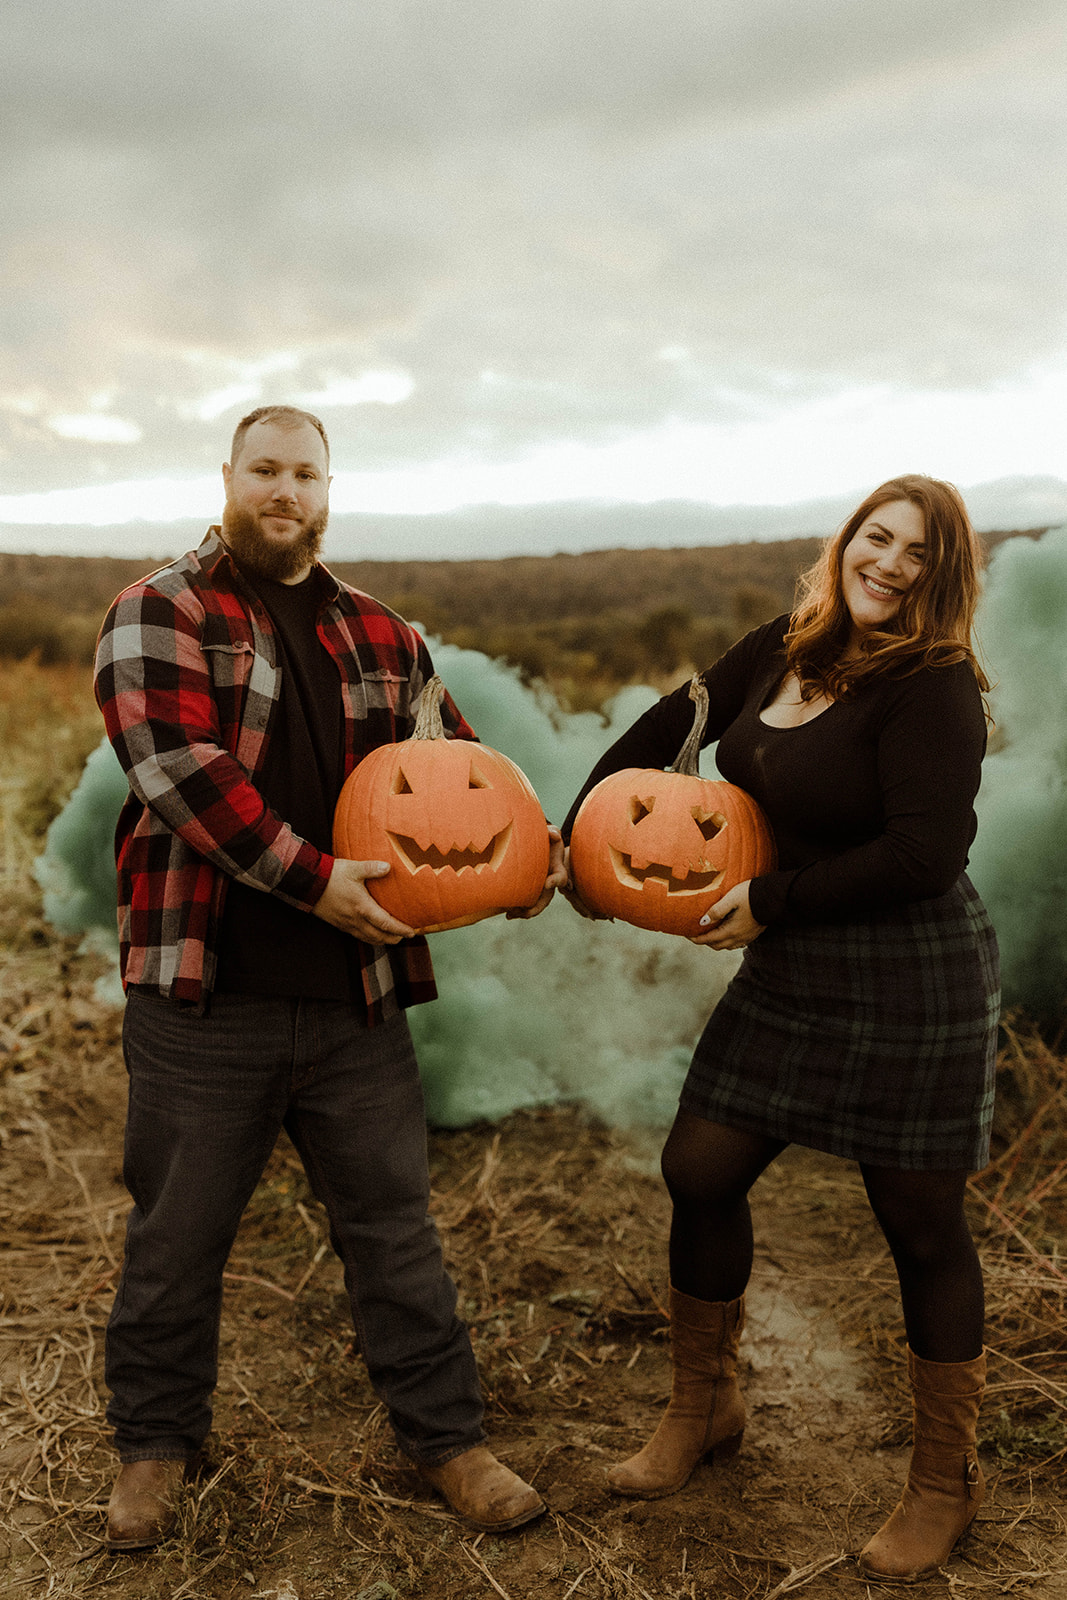 Beautiful couple pose in a pumpkin patch